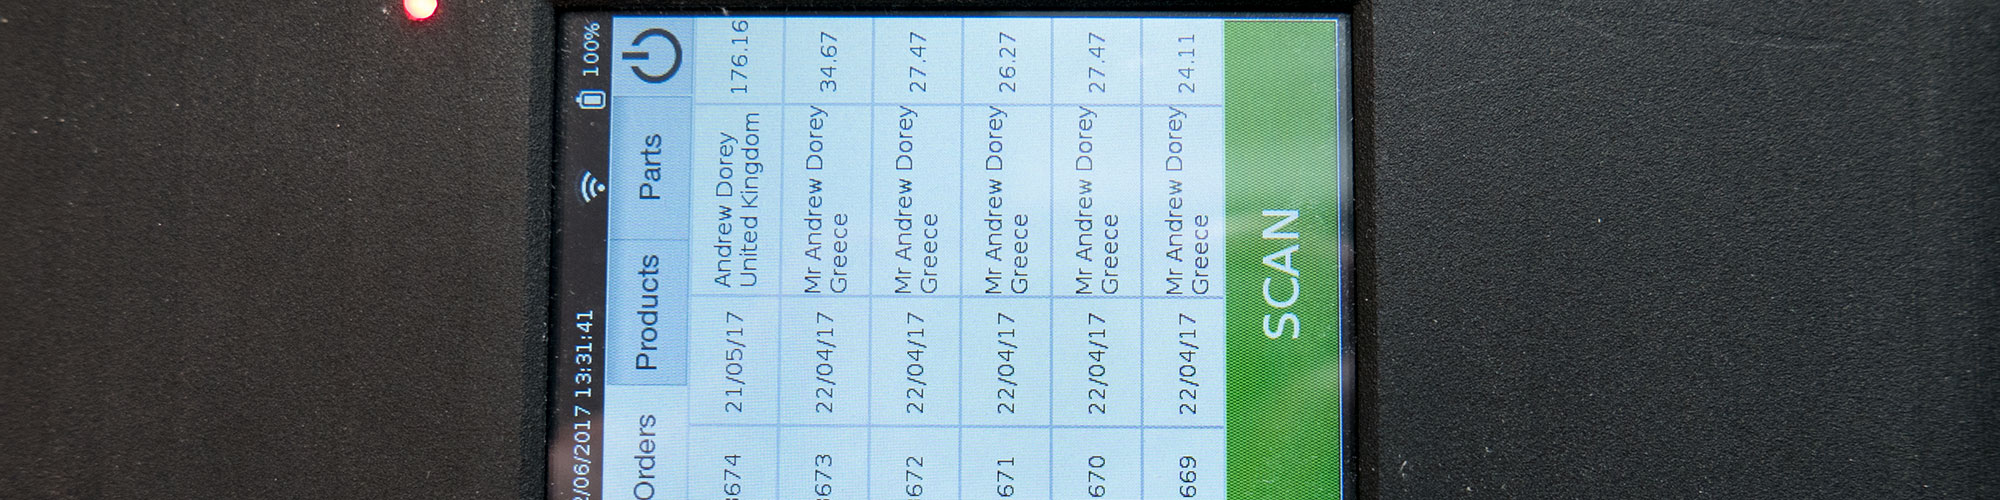 Raspberry Pi Zero Handheld Barcode Scanner Part 3